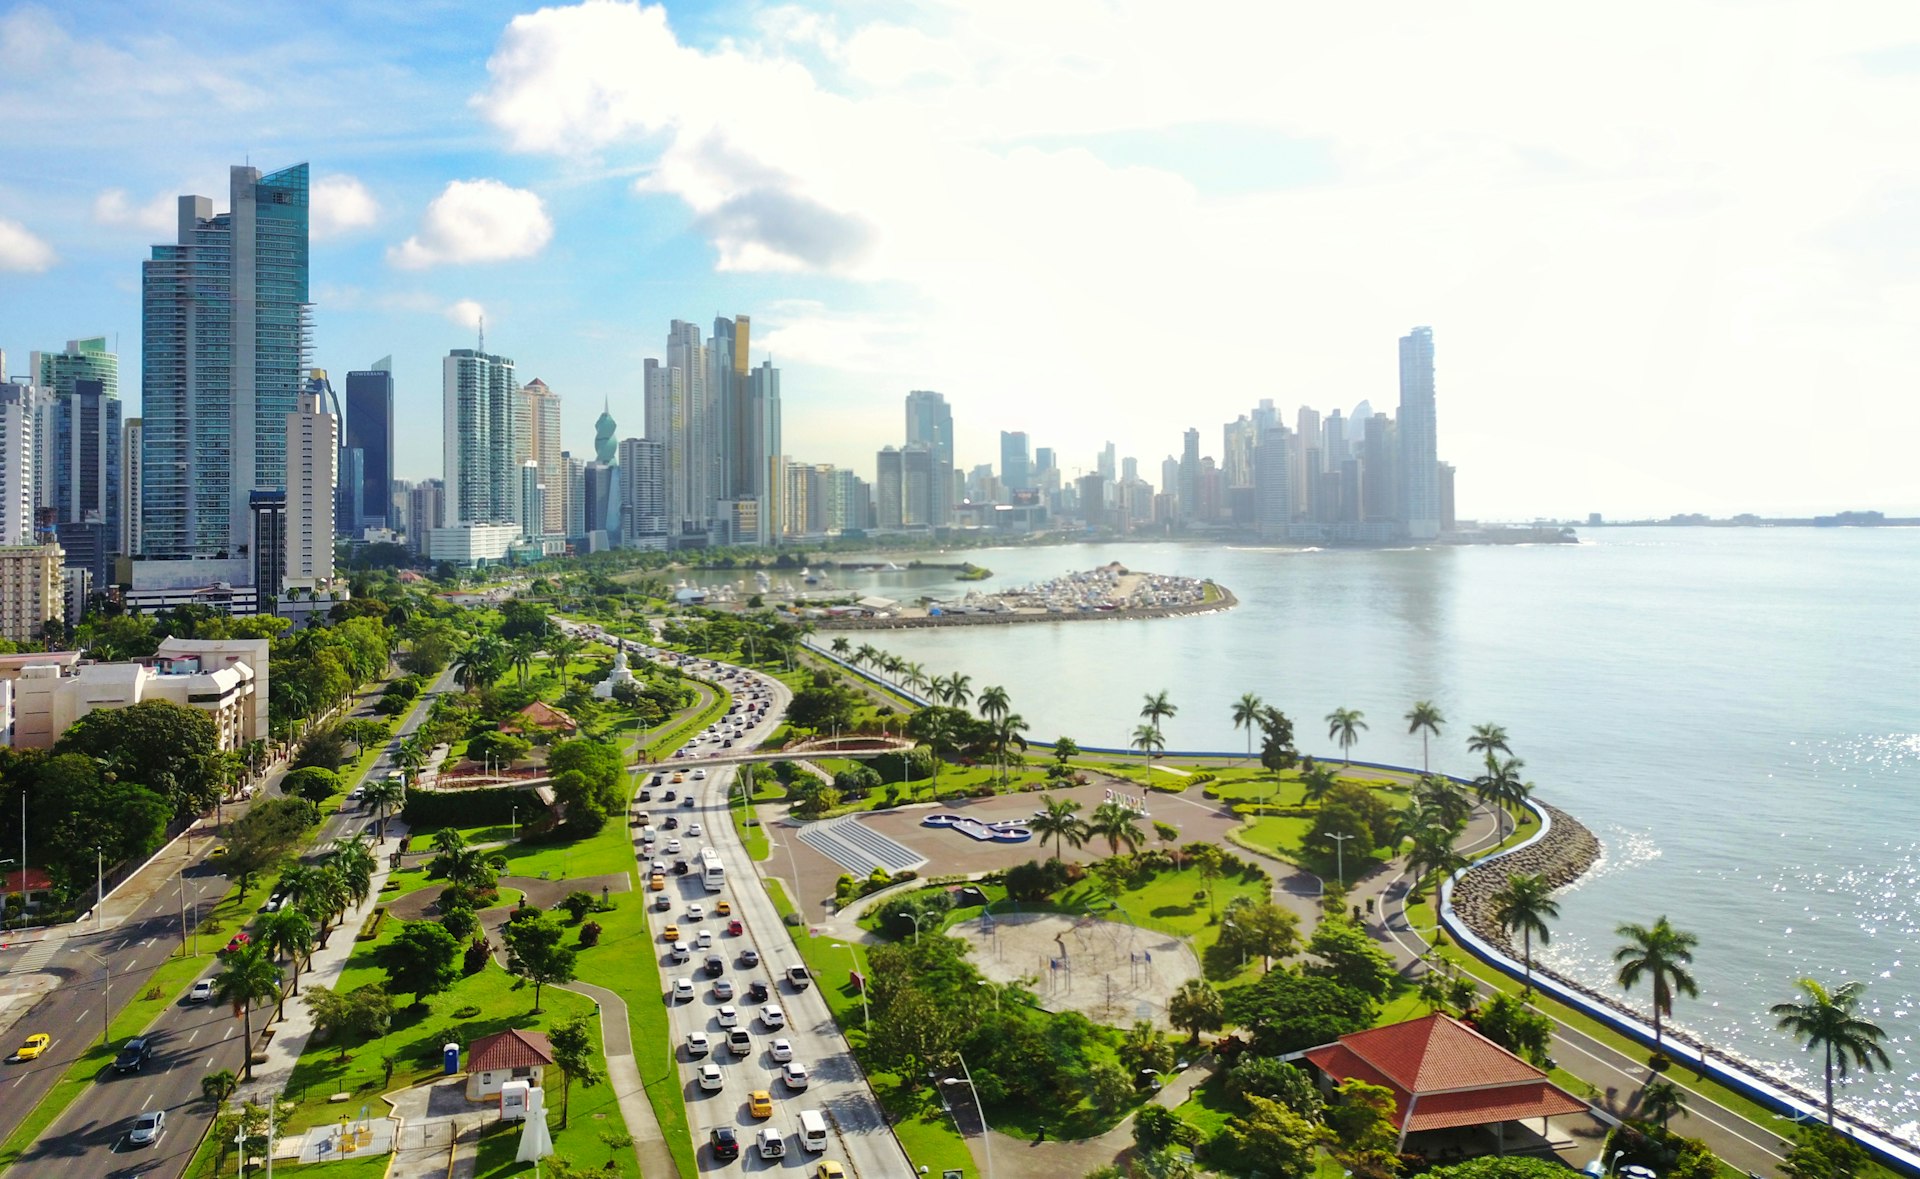 Traffic heading towards the modern skyline of Panama City, Panama